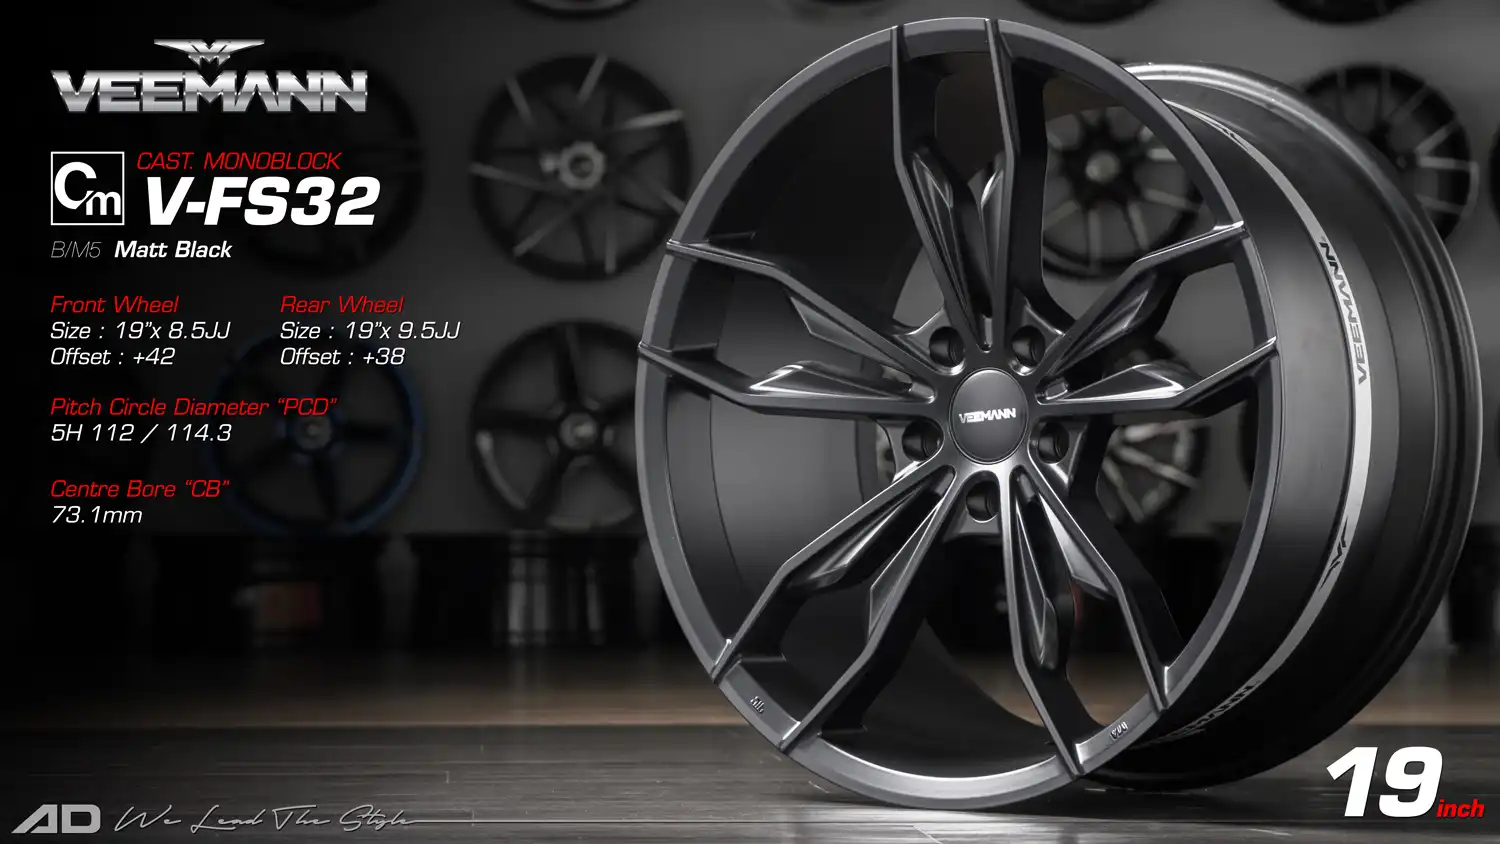 Ad wheels | Veemann v-fs32 19 inch 5H112/114.3